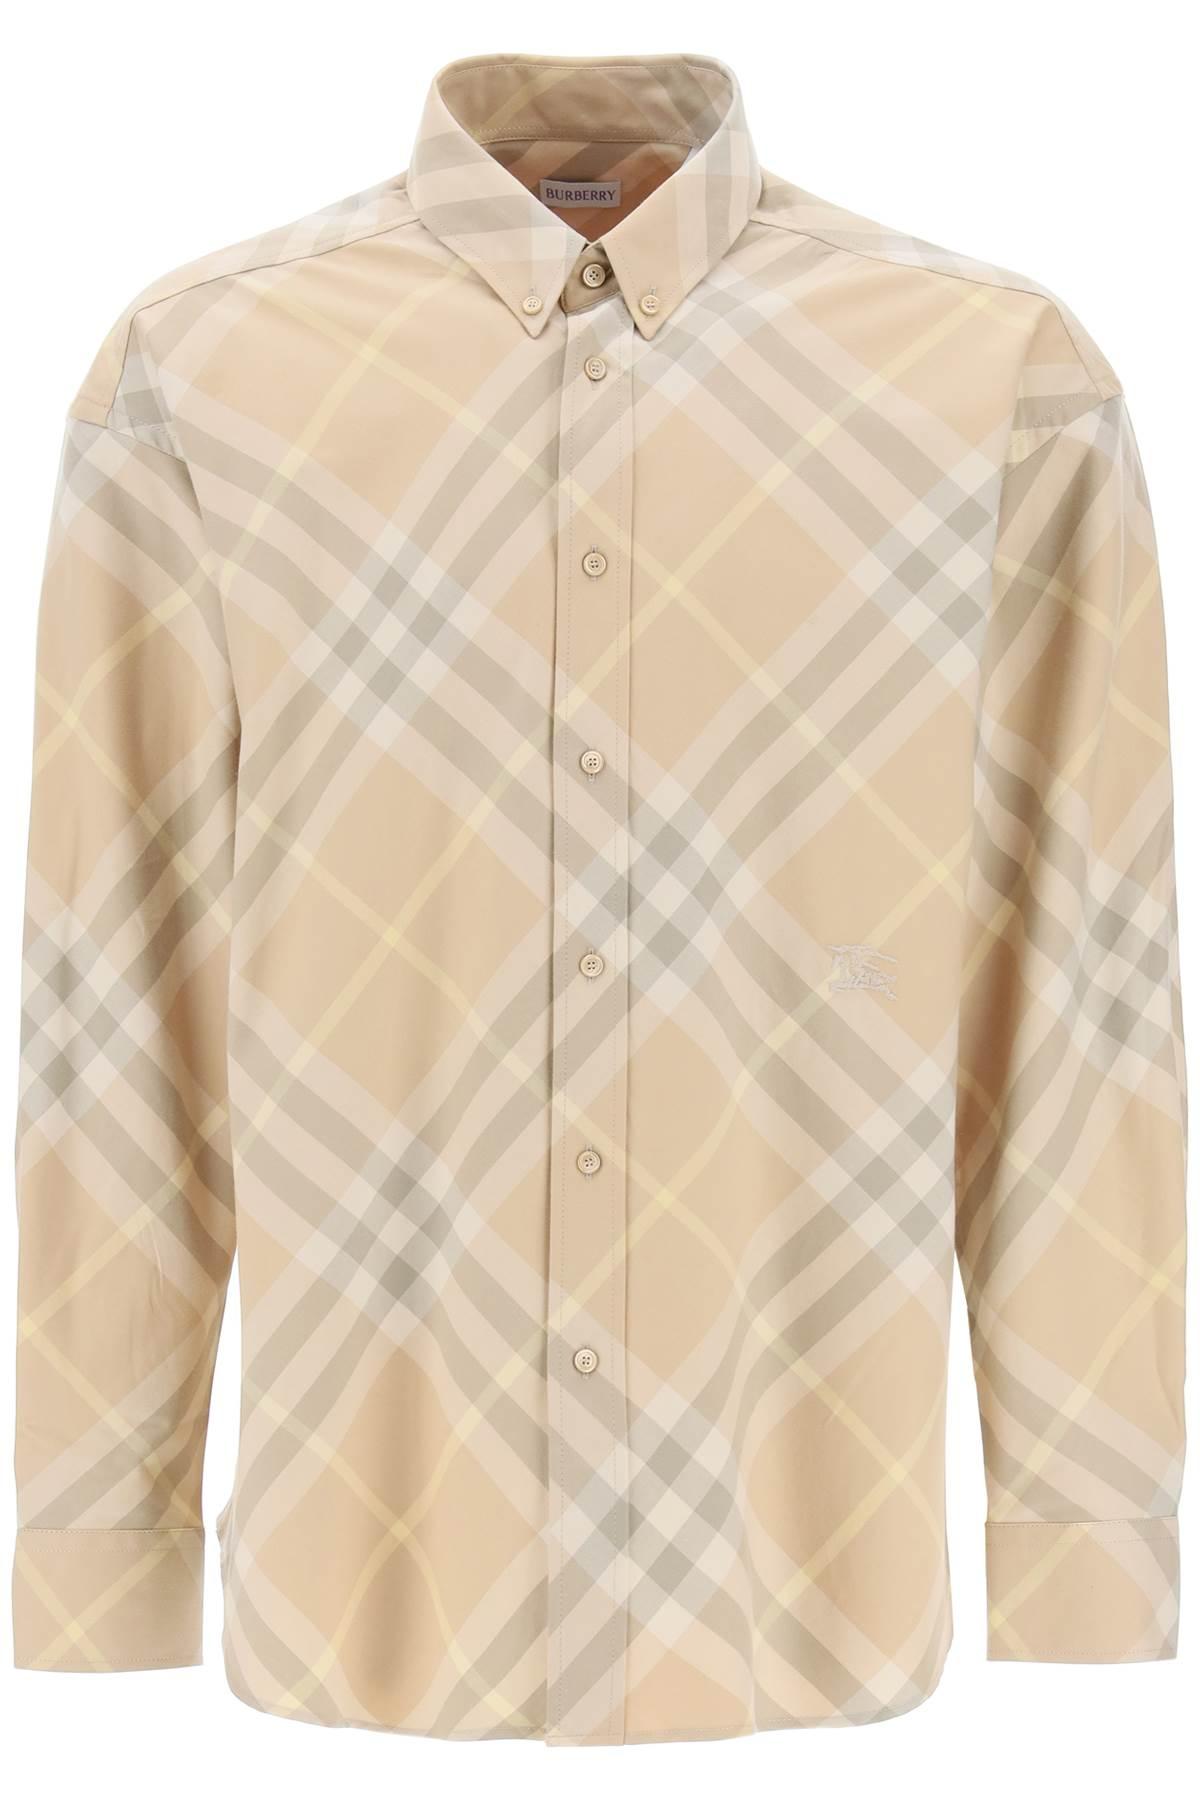 Burberry Check Cotton Shirt - JOHN JULIA